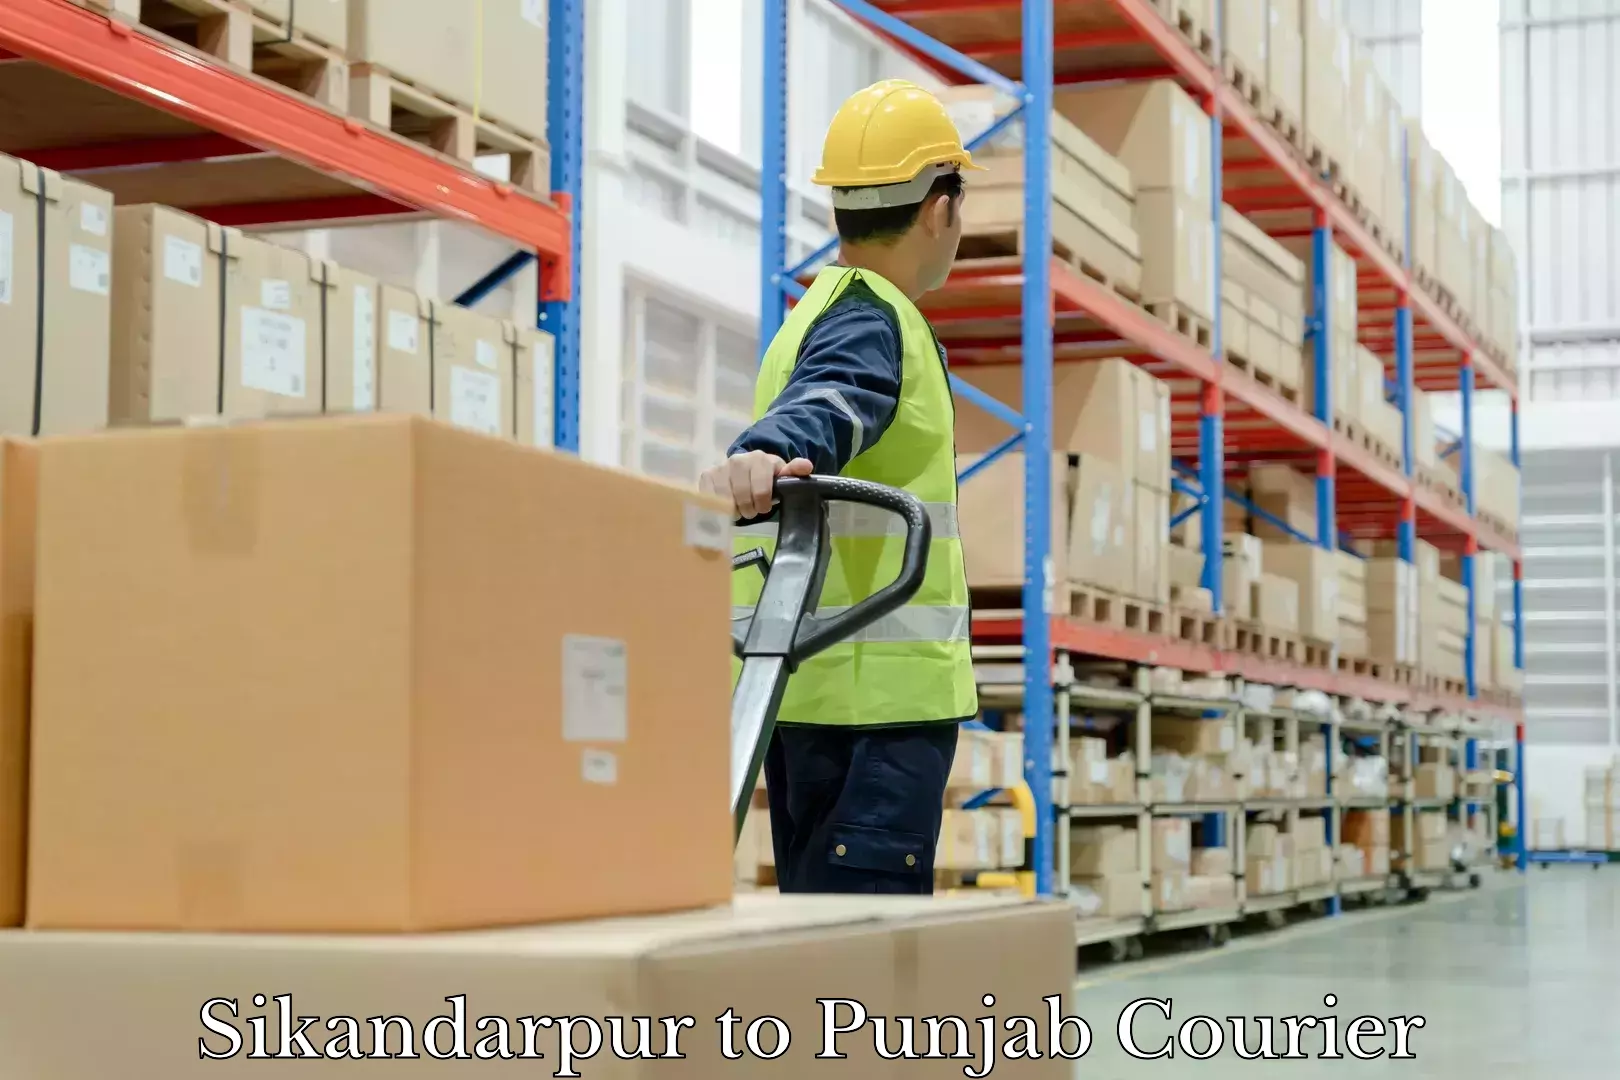 Luggage transport company Sikandarpur to Punjab